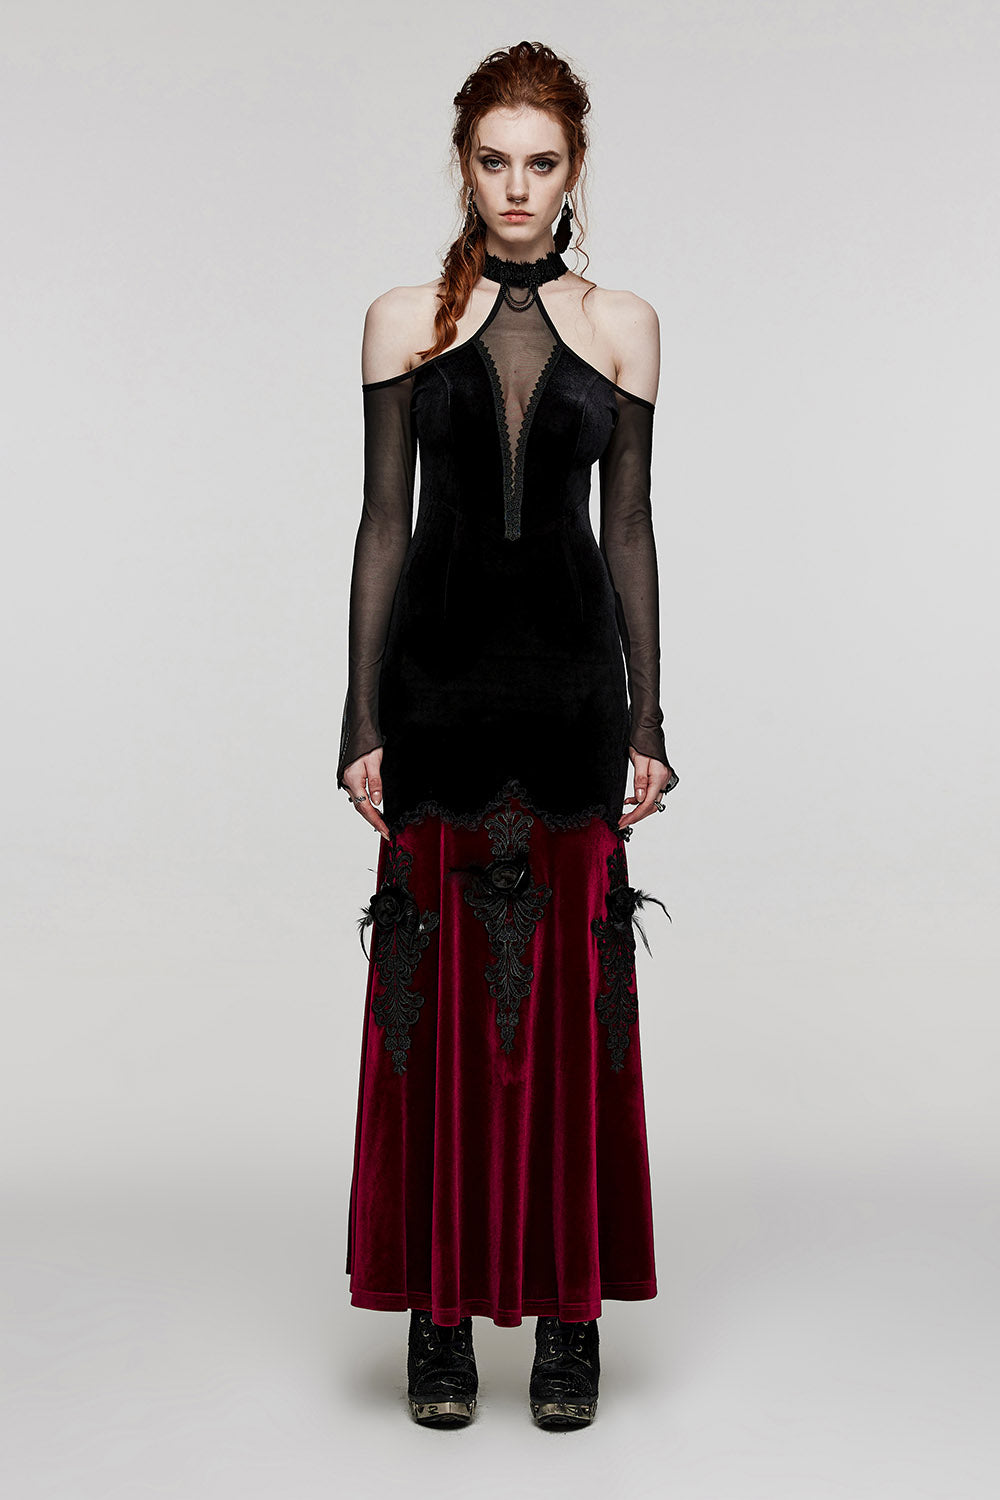 Woman Dress Free Shipping Ladies Mesh Gothic Black Dress Long Sleeve Polo  Shirt Dress Plus Size